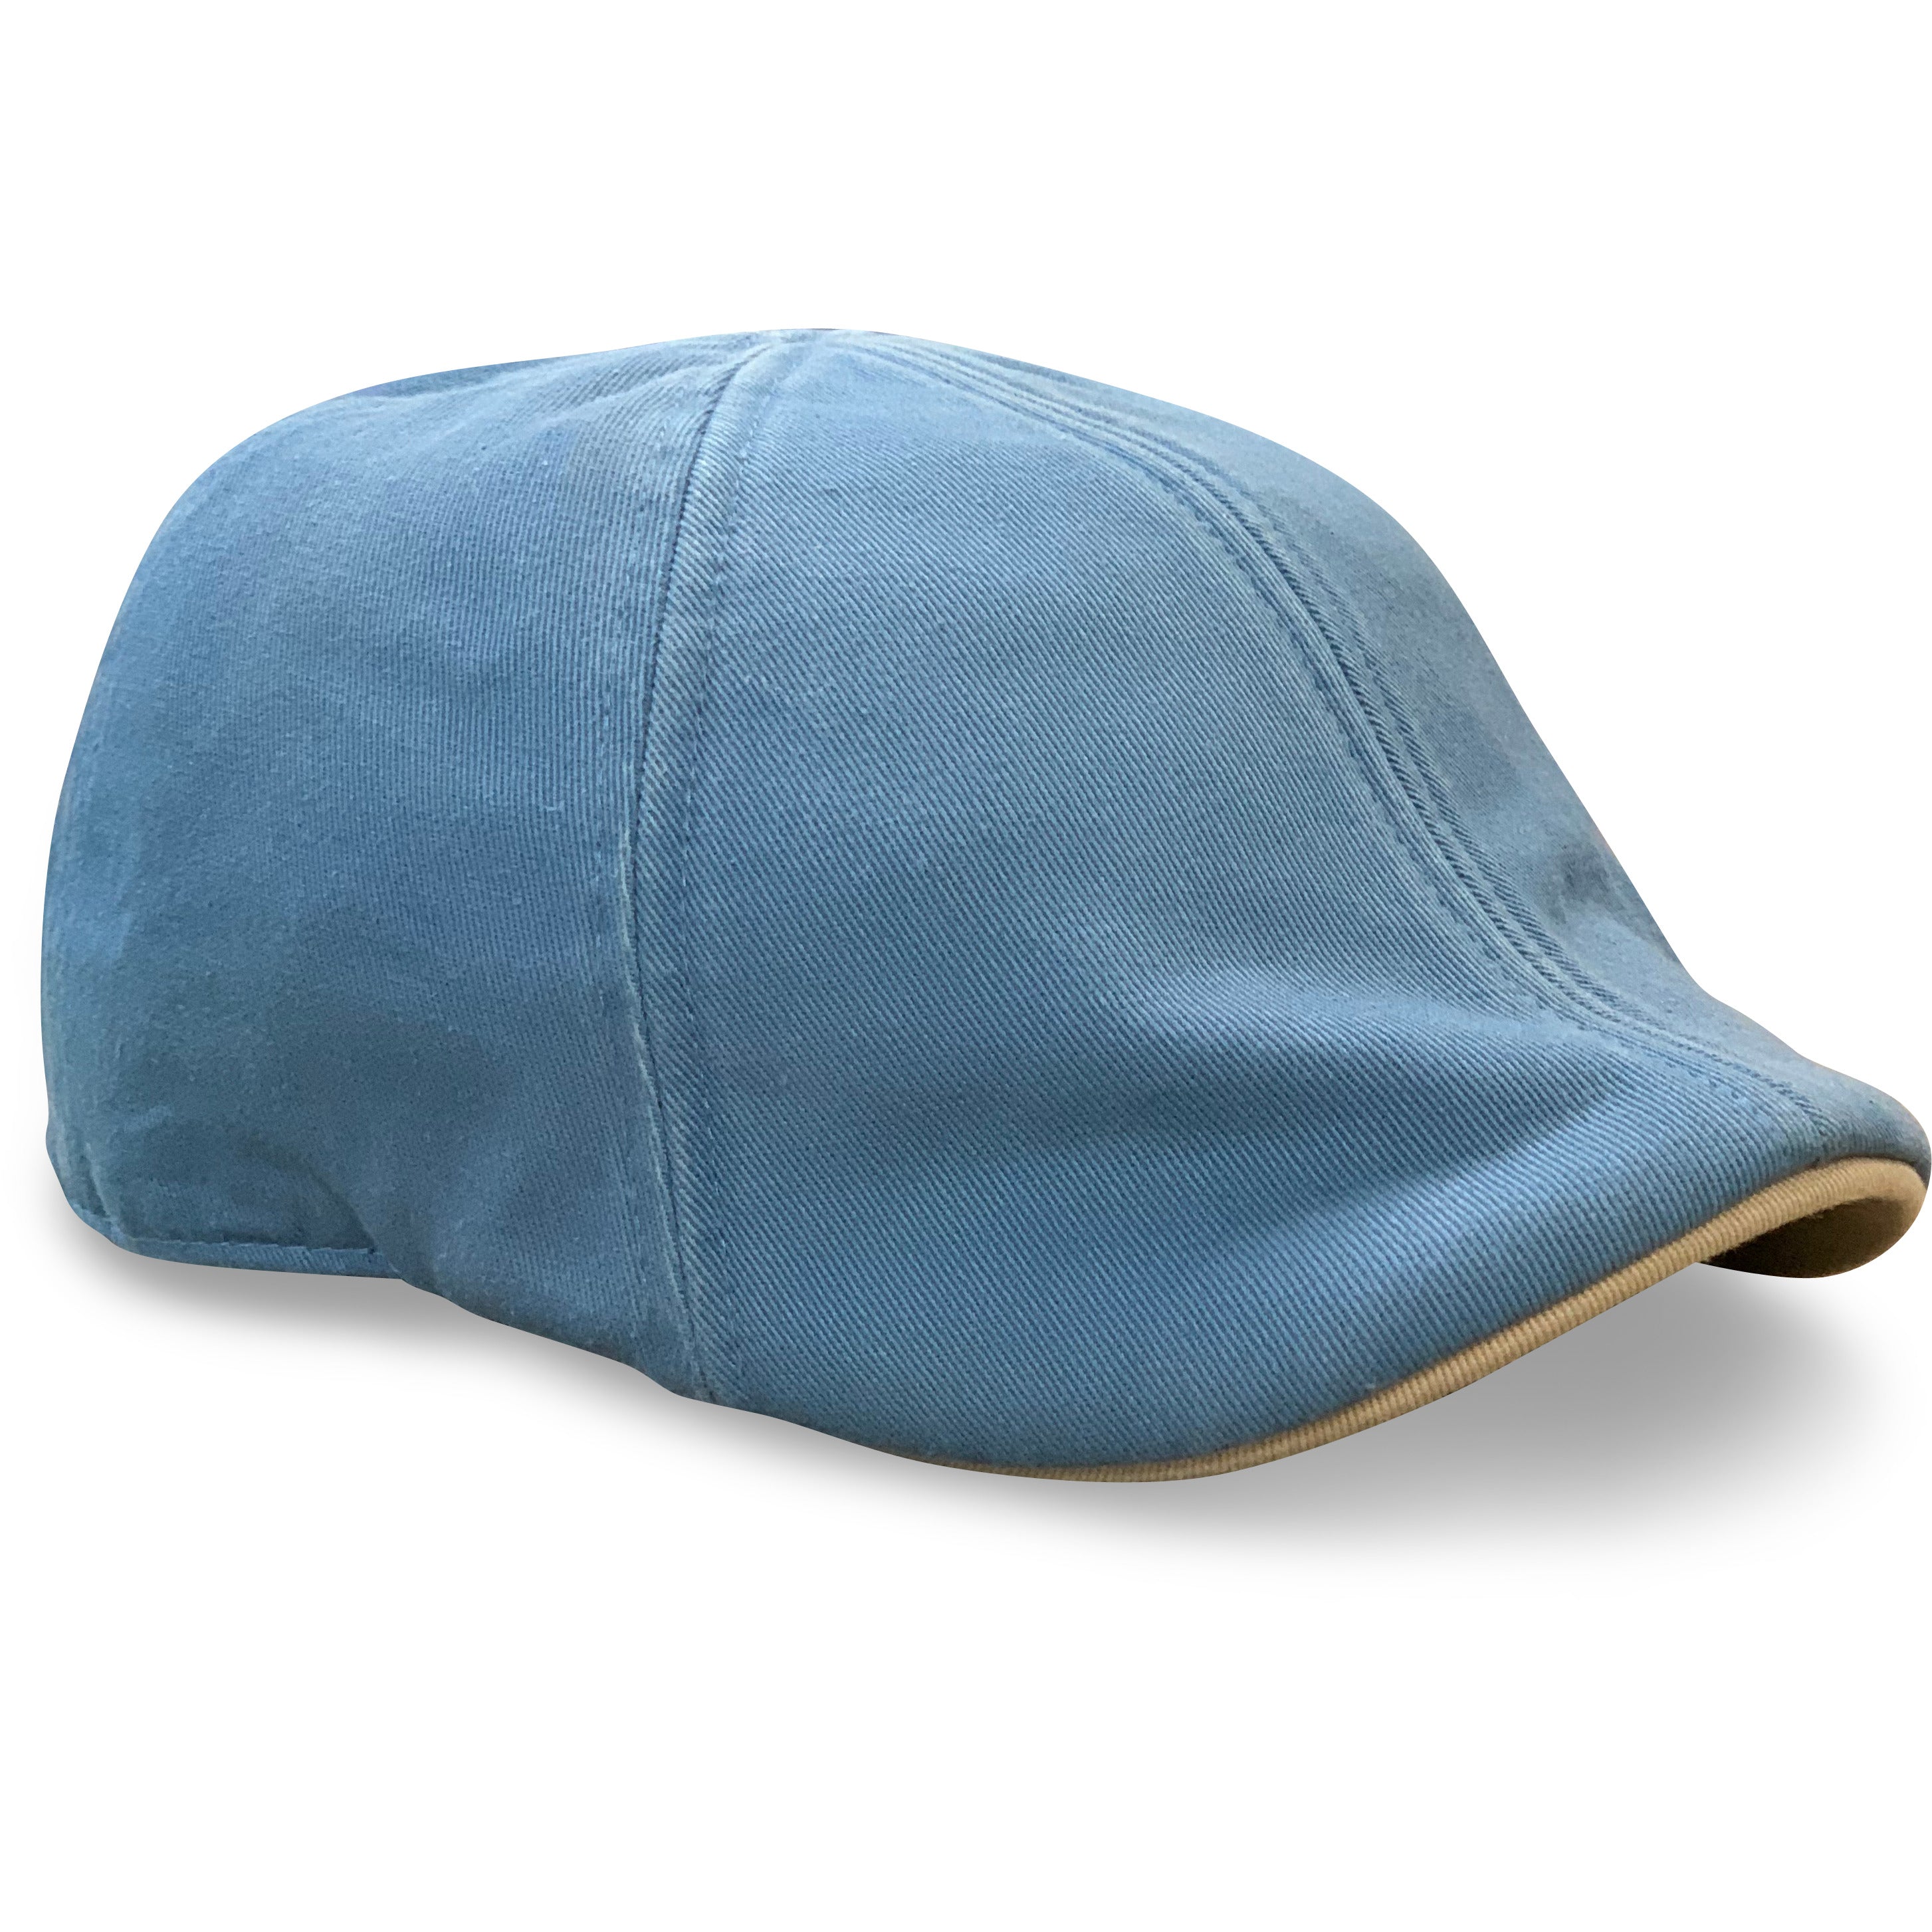 Flat Brim Teal Hat - Nautical Design